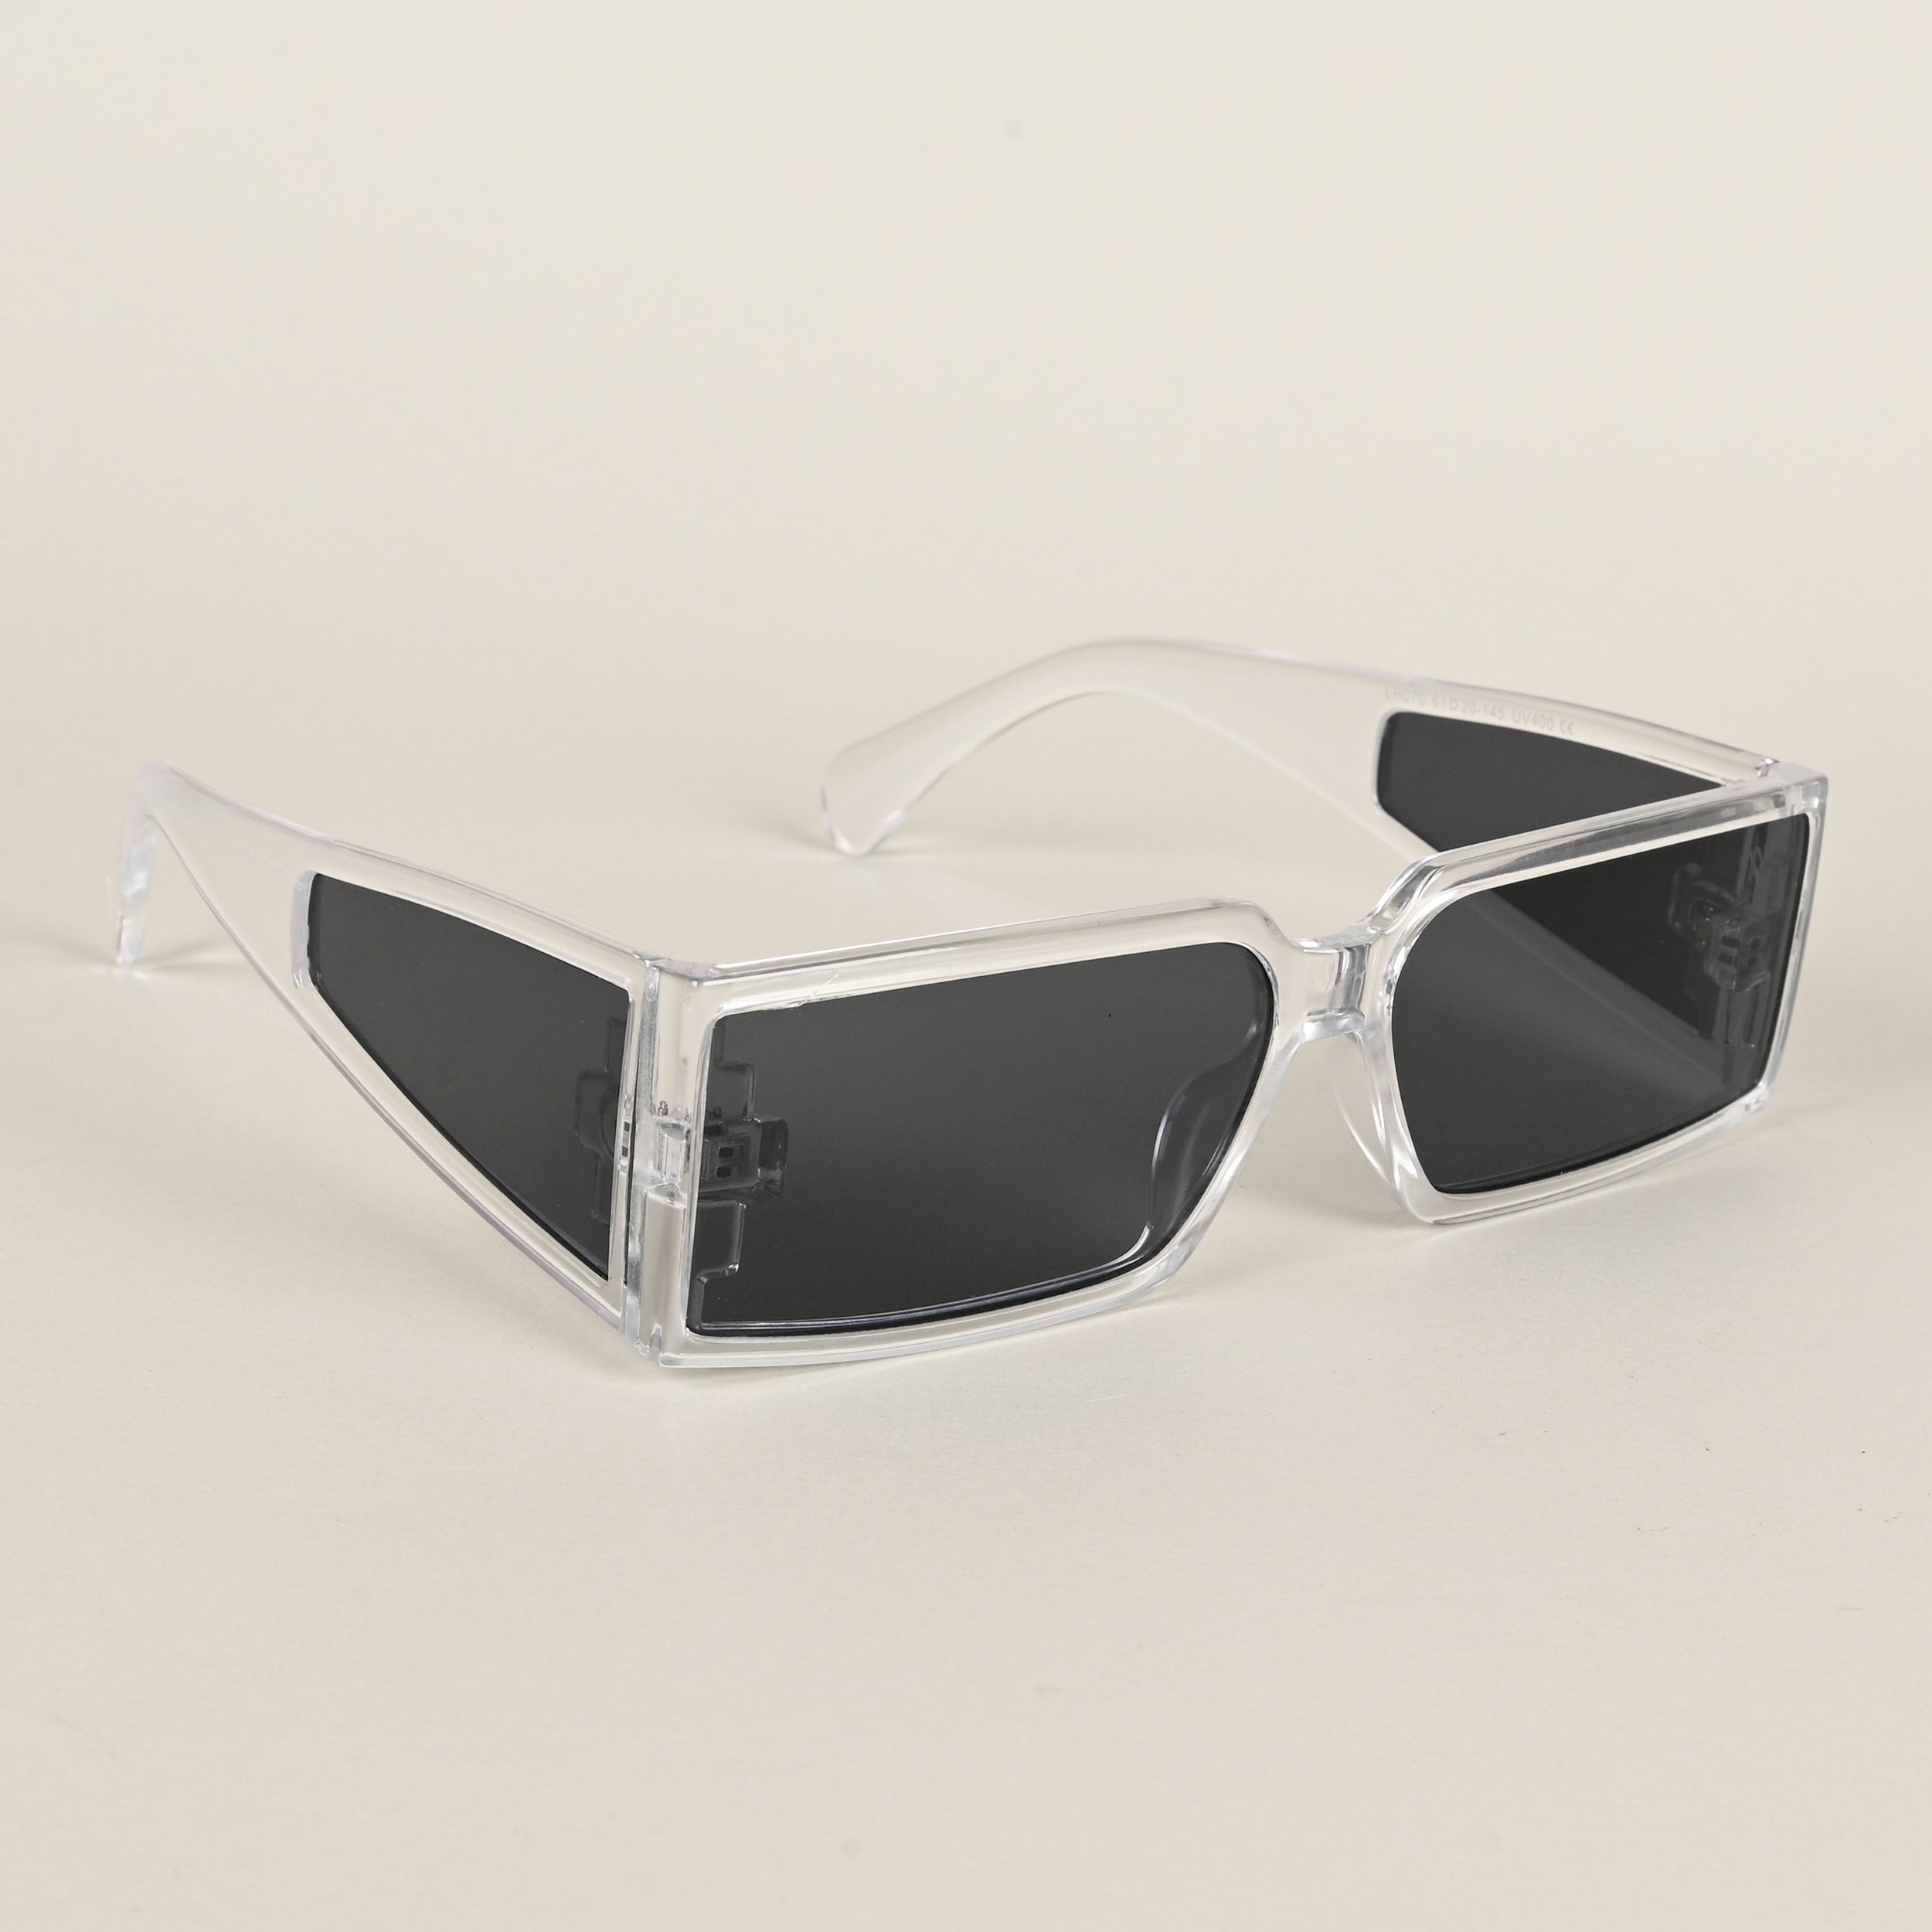 Voyage Black Rectangle Sunglasses for Men & Women (LH070MG4510)